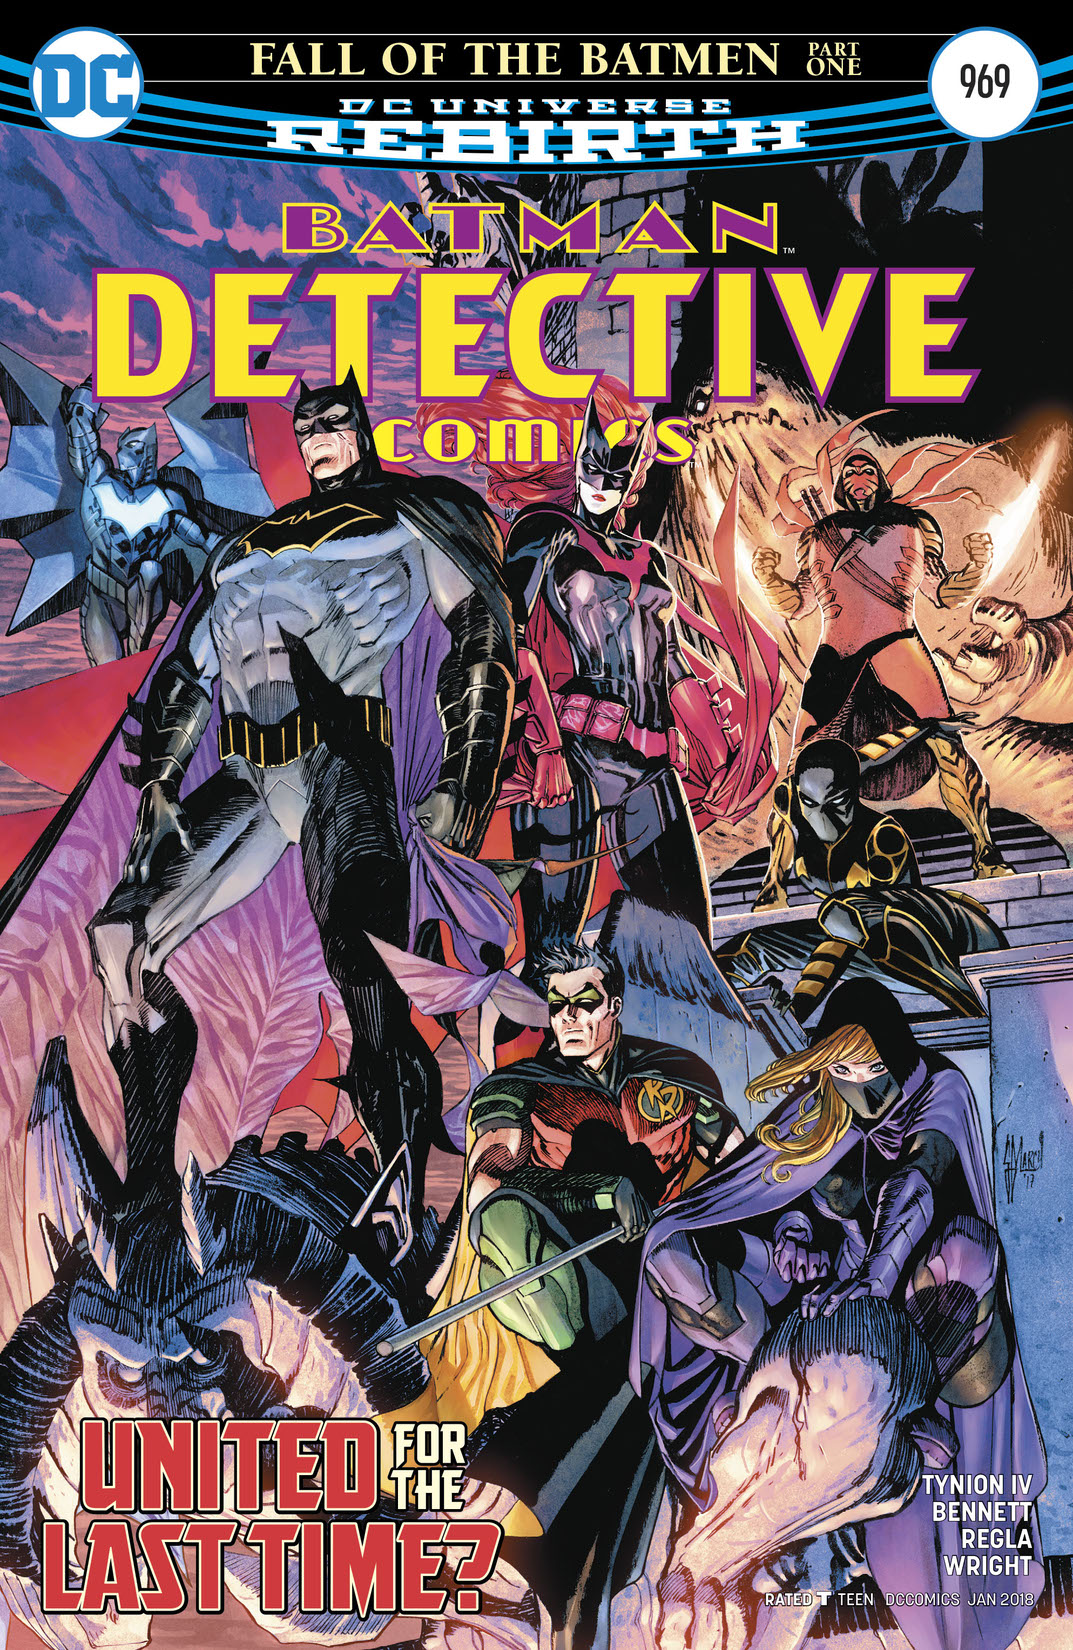 Detective Comics (2016-) #969 preview images